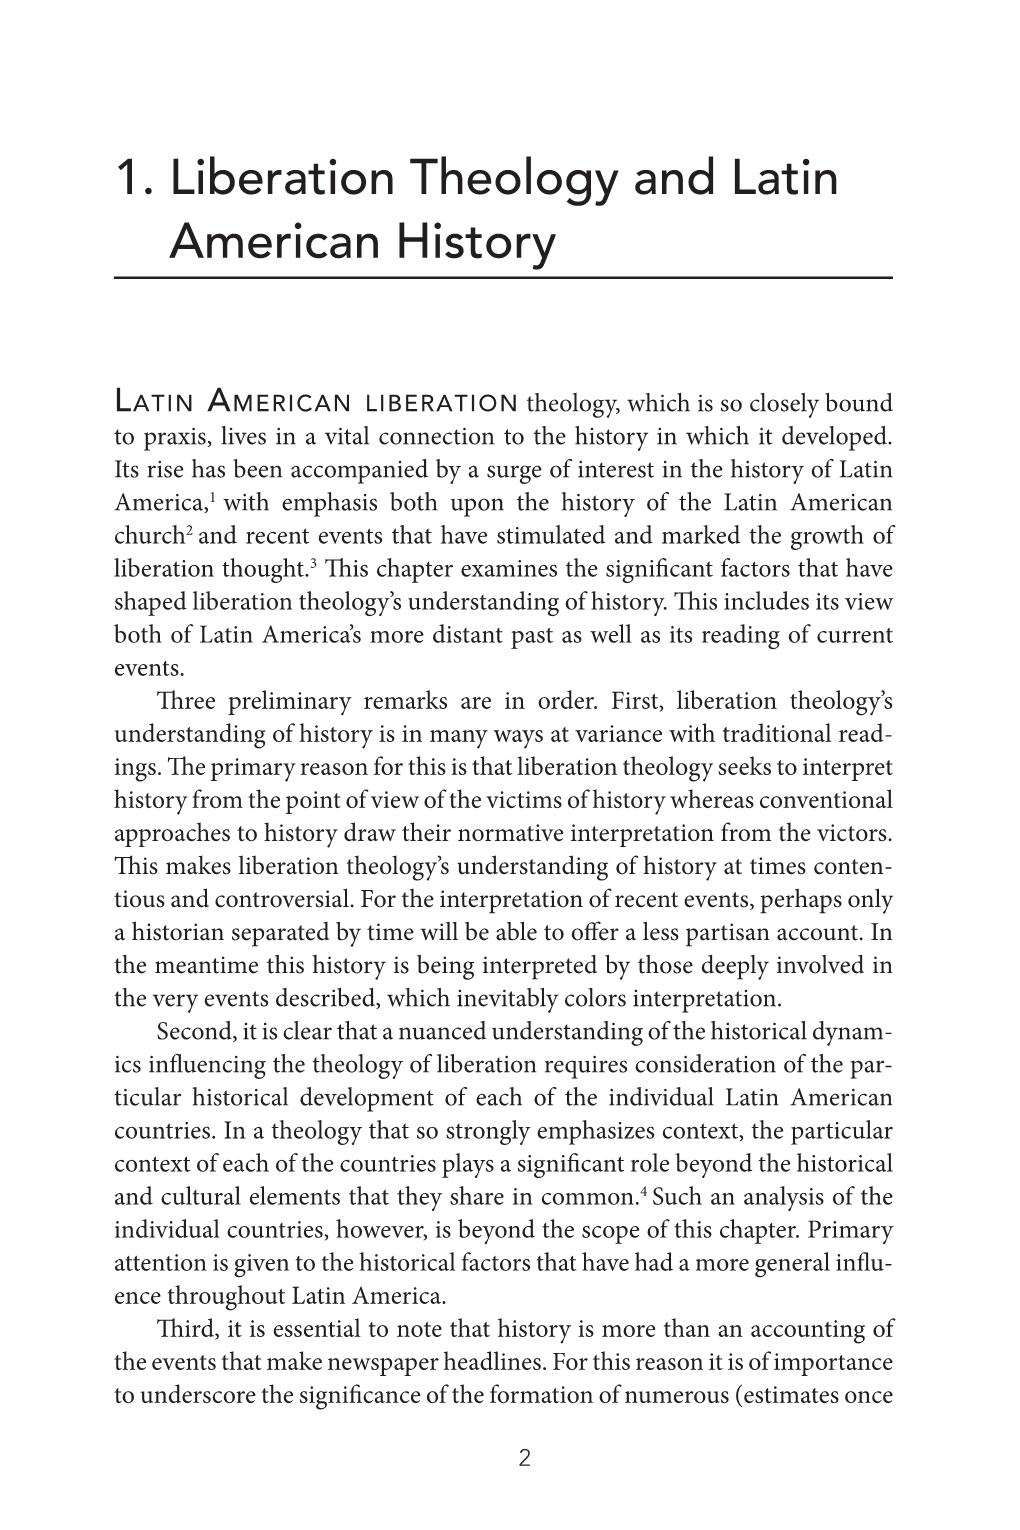 1. Liberation Theology and Latin American History